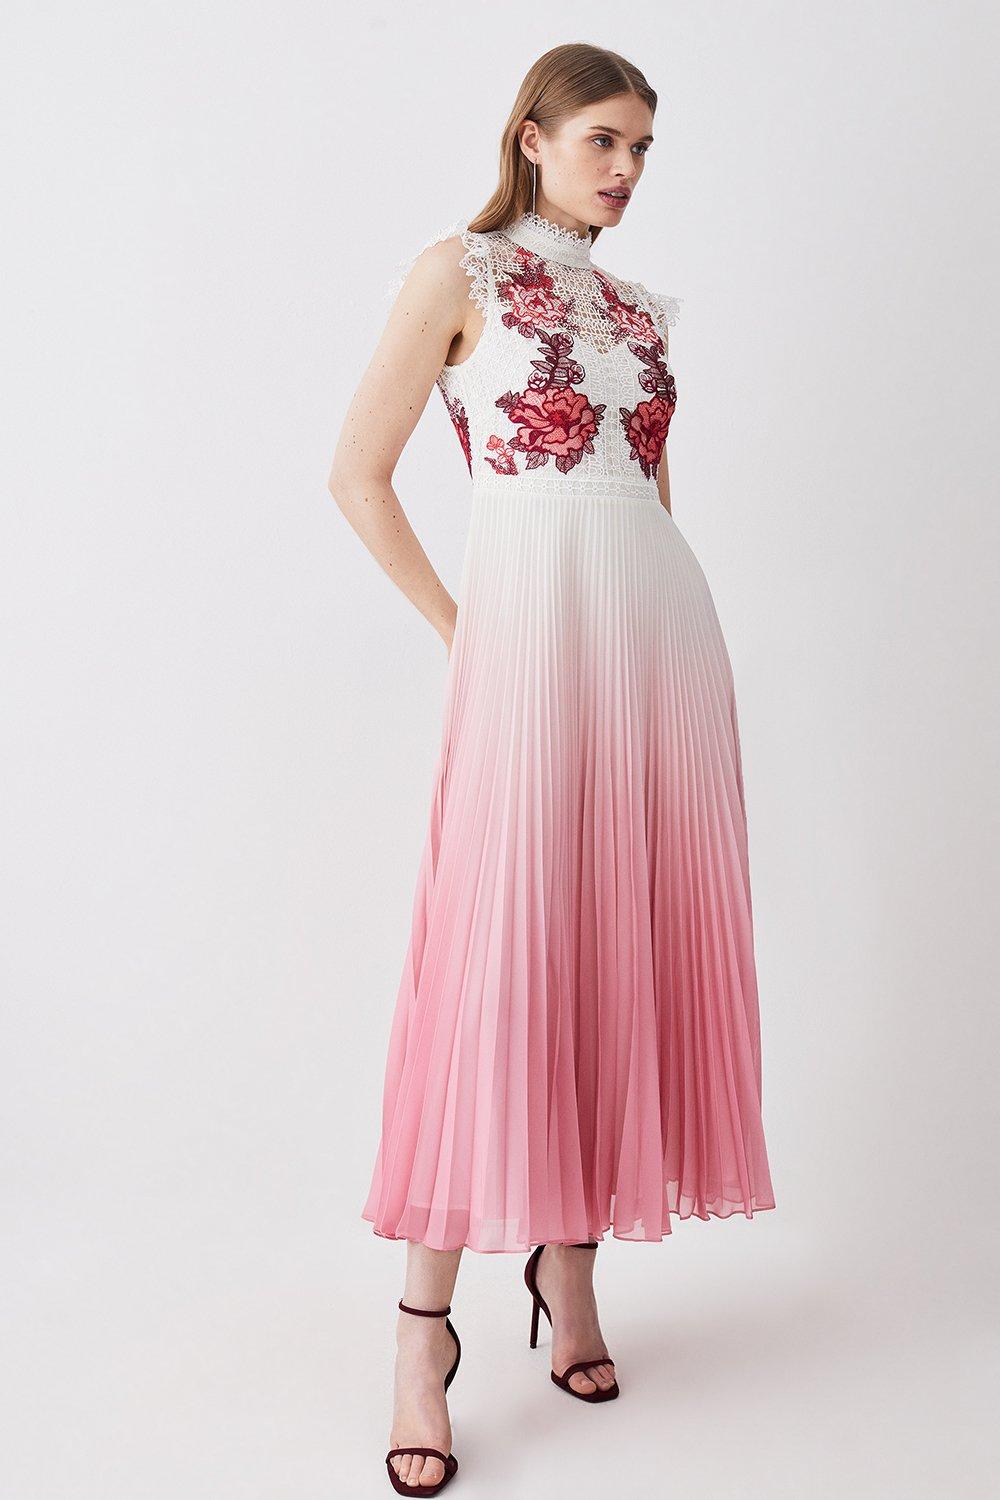 rose guipure lace woven pleat skirt midi dress